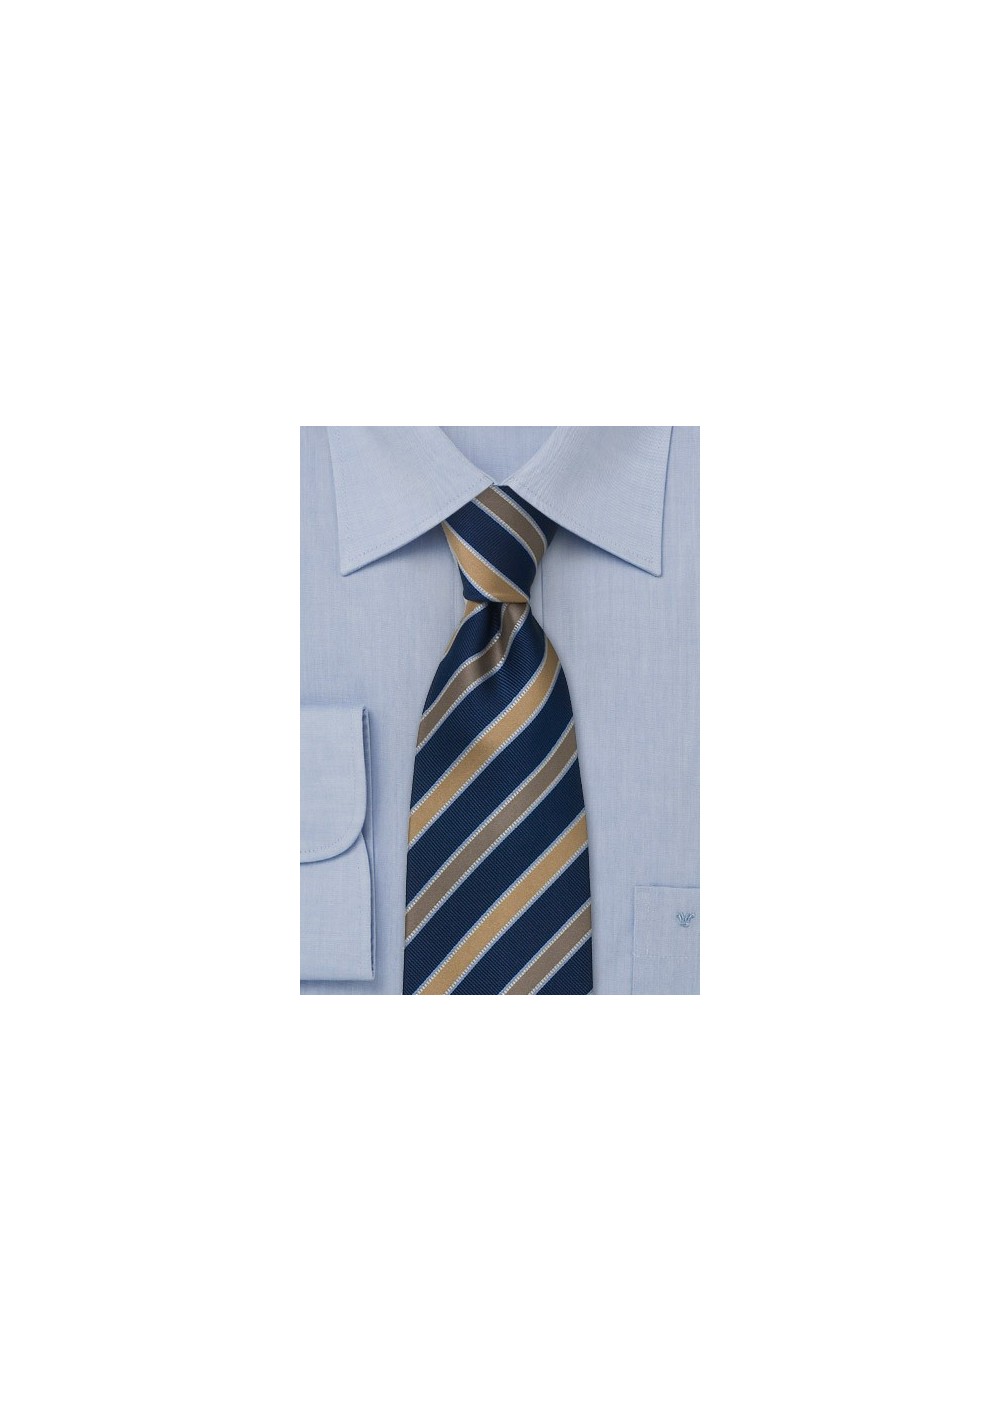 Dark blue striped silk tie - Striped tie in midnight blue, with tan and bronze stripes